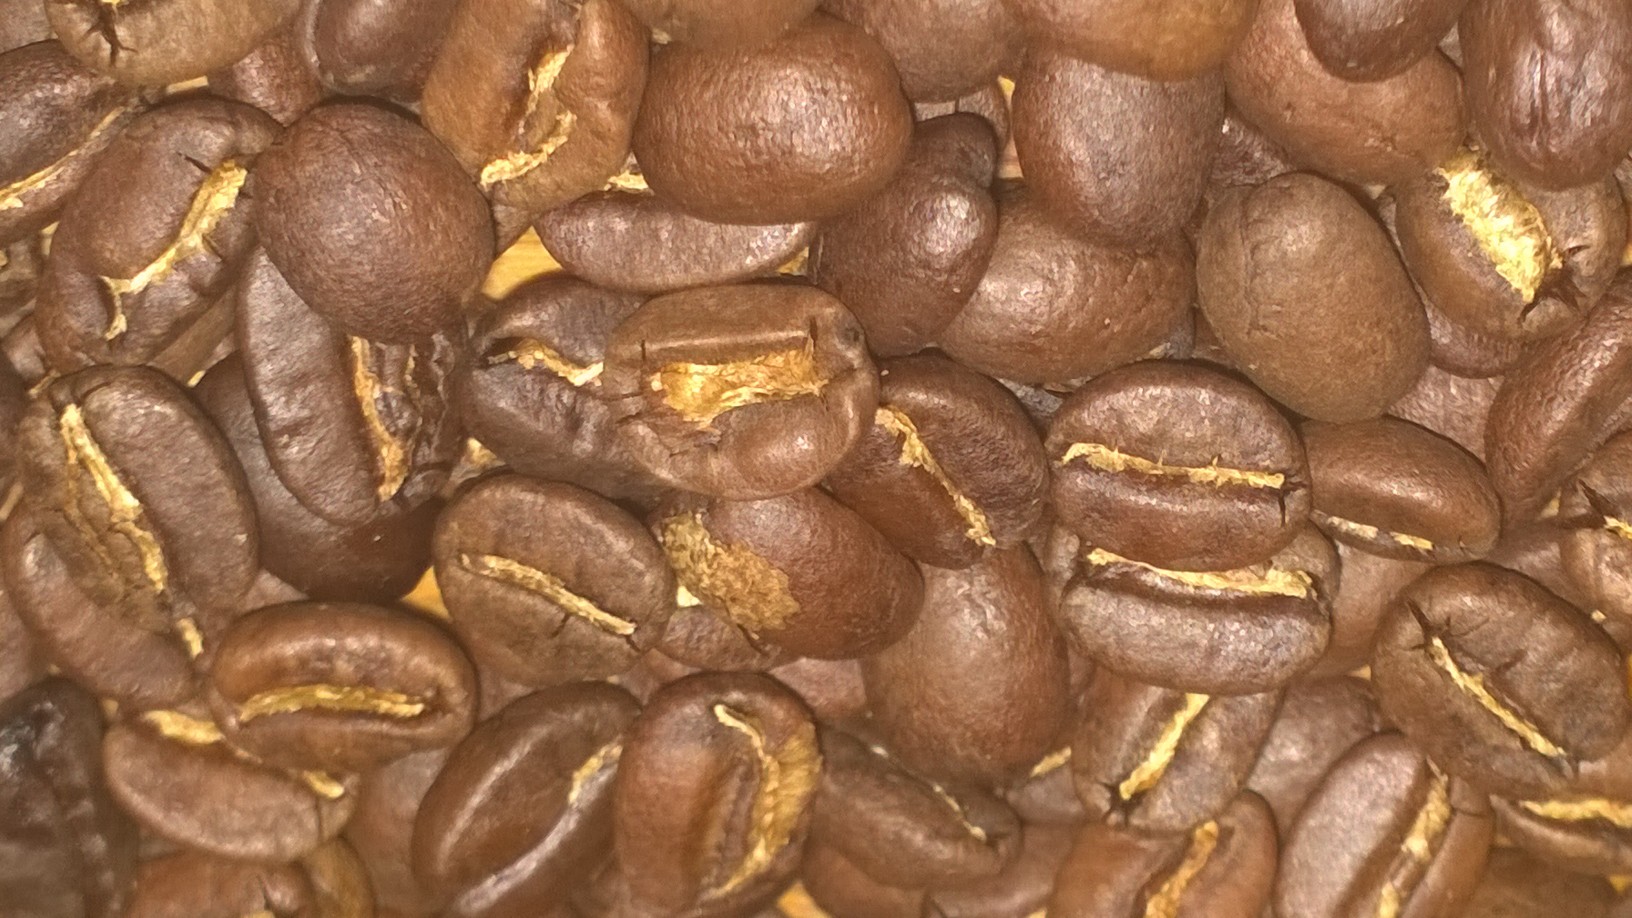 Roasted Coffee Beans Ethiopia Sidama Guji 5 pounds